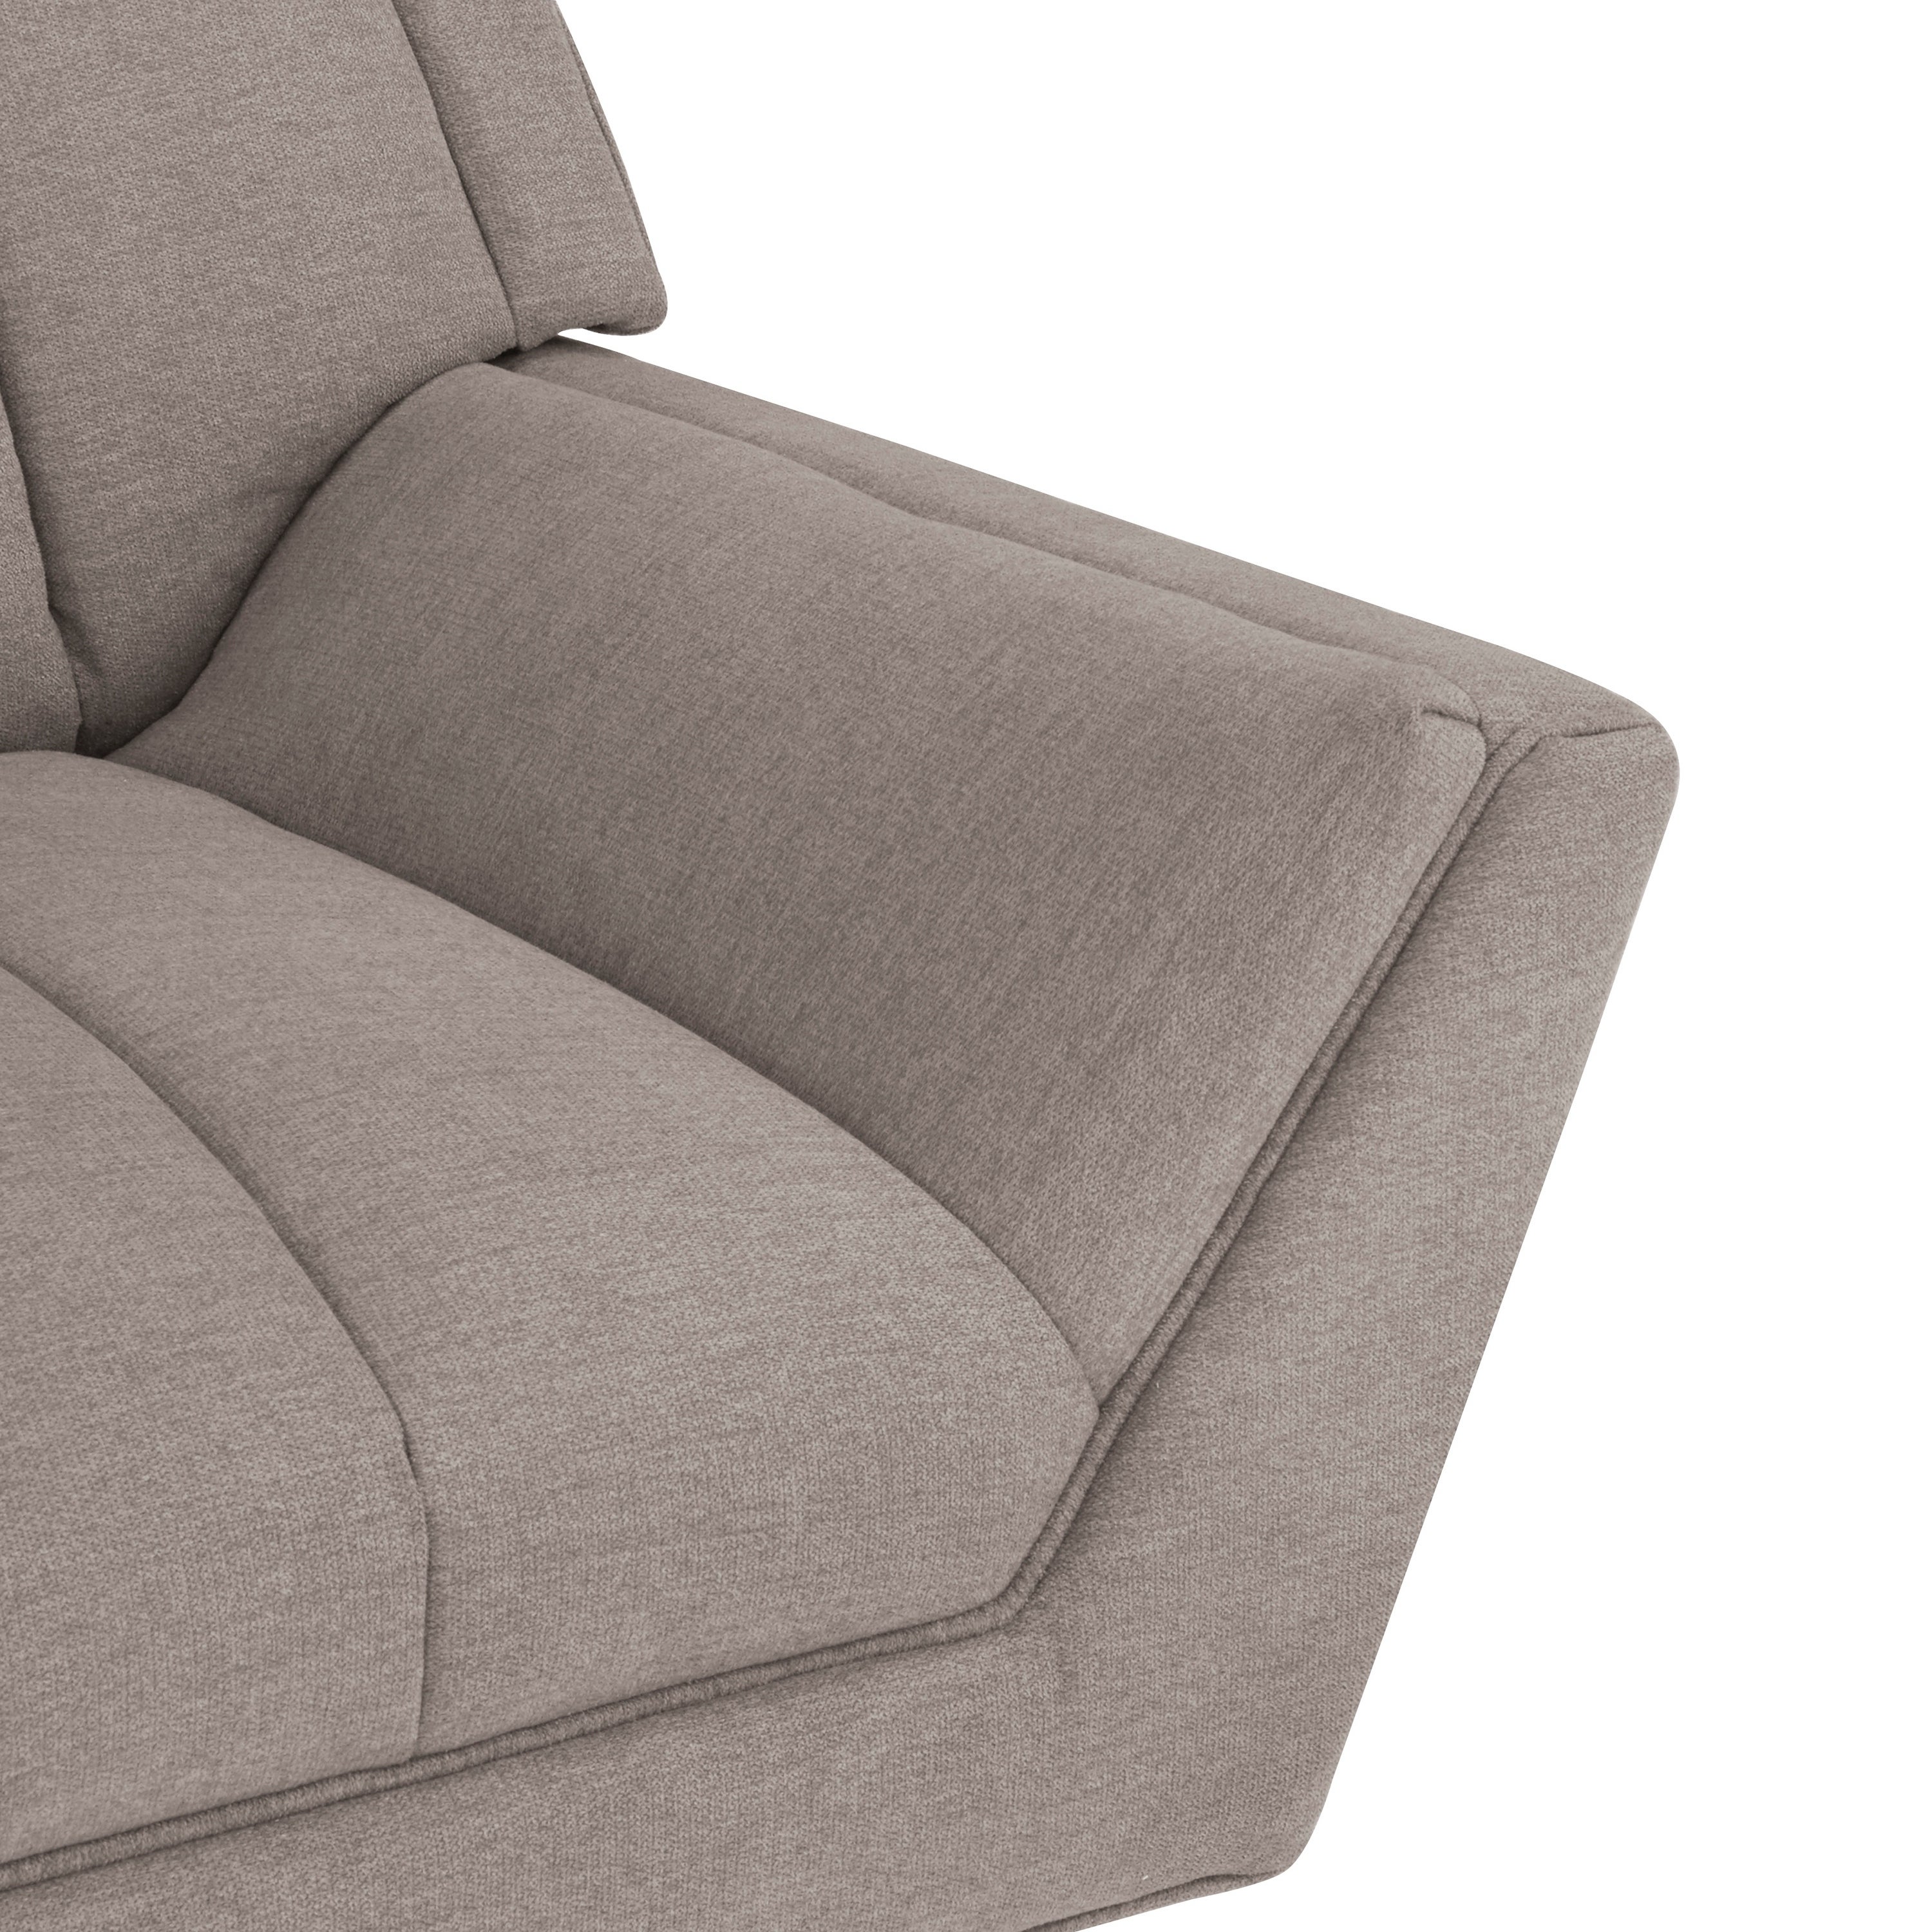 100days Kingbird Furniture Company Brand Green Sectional Sofa Manufacture 9